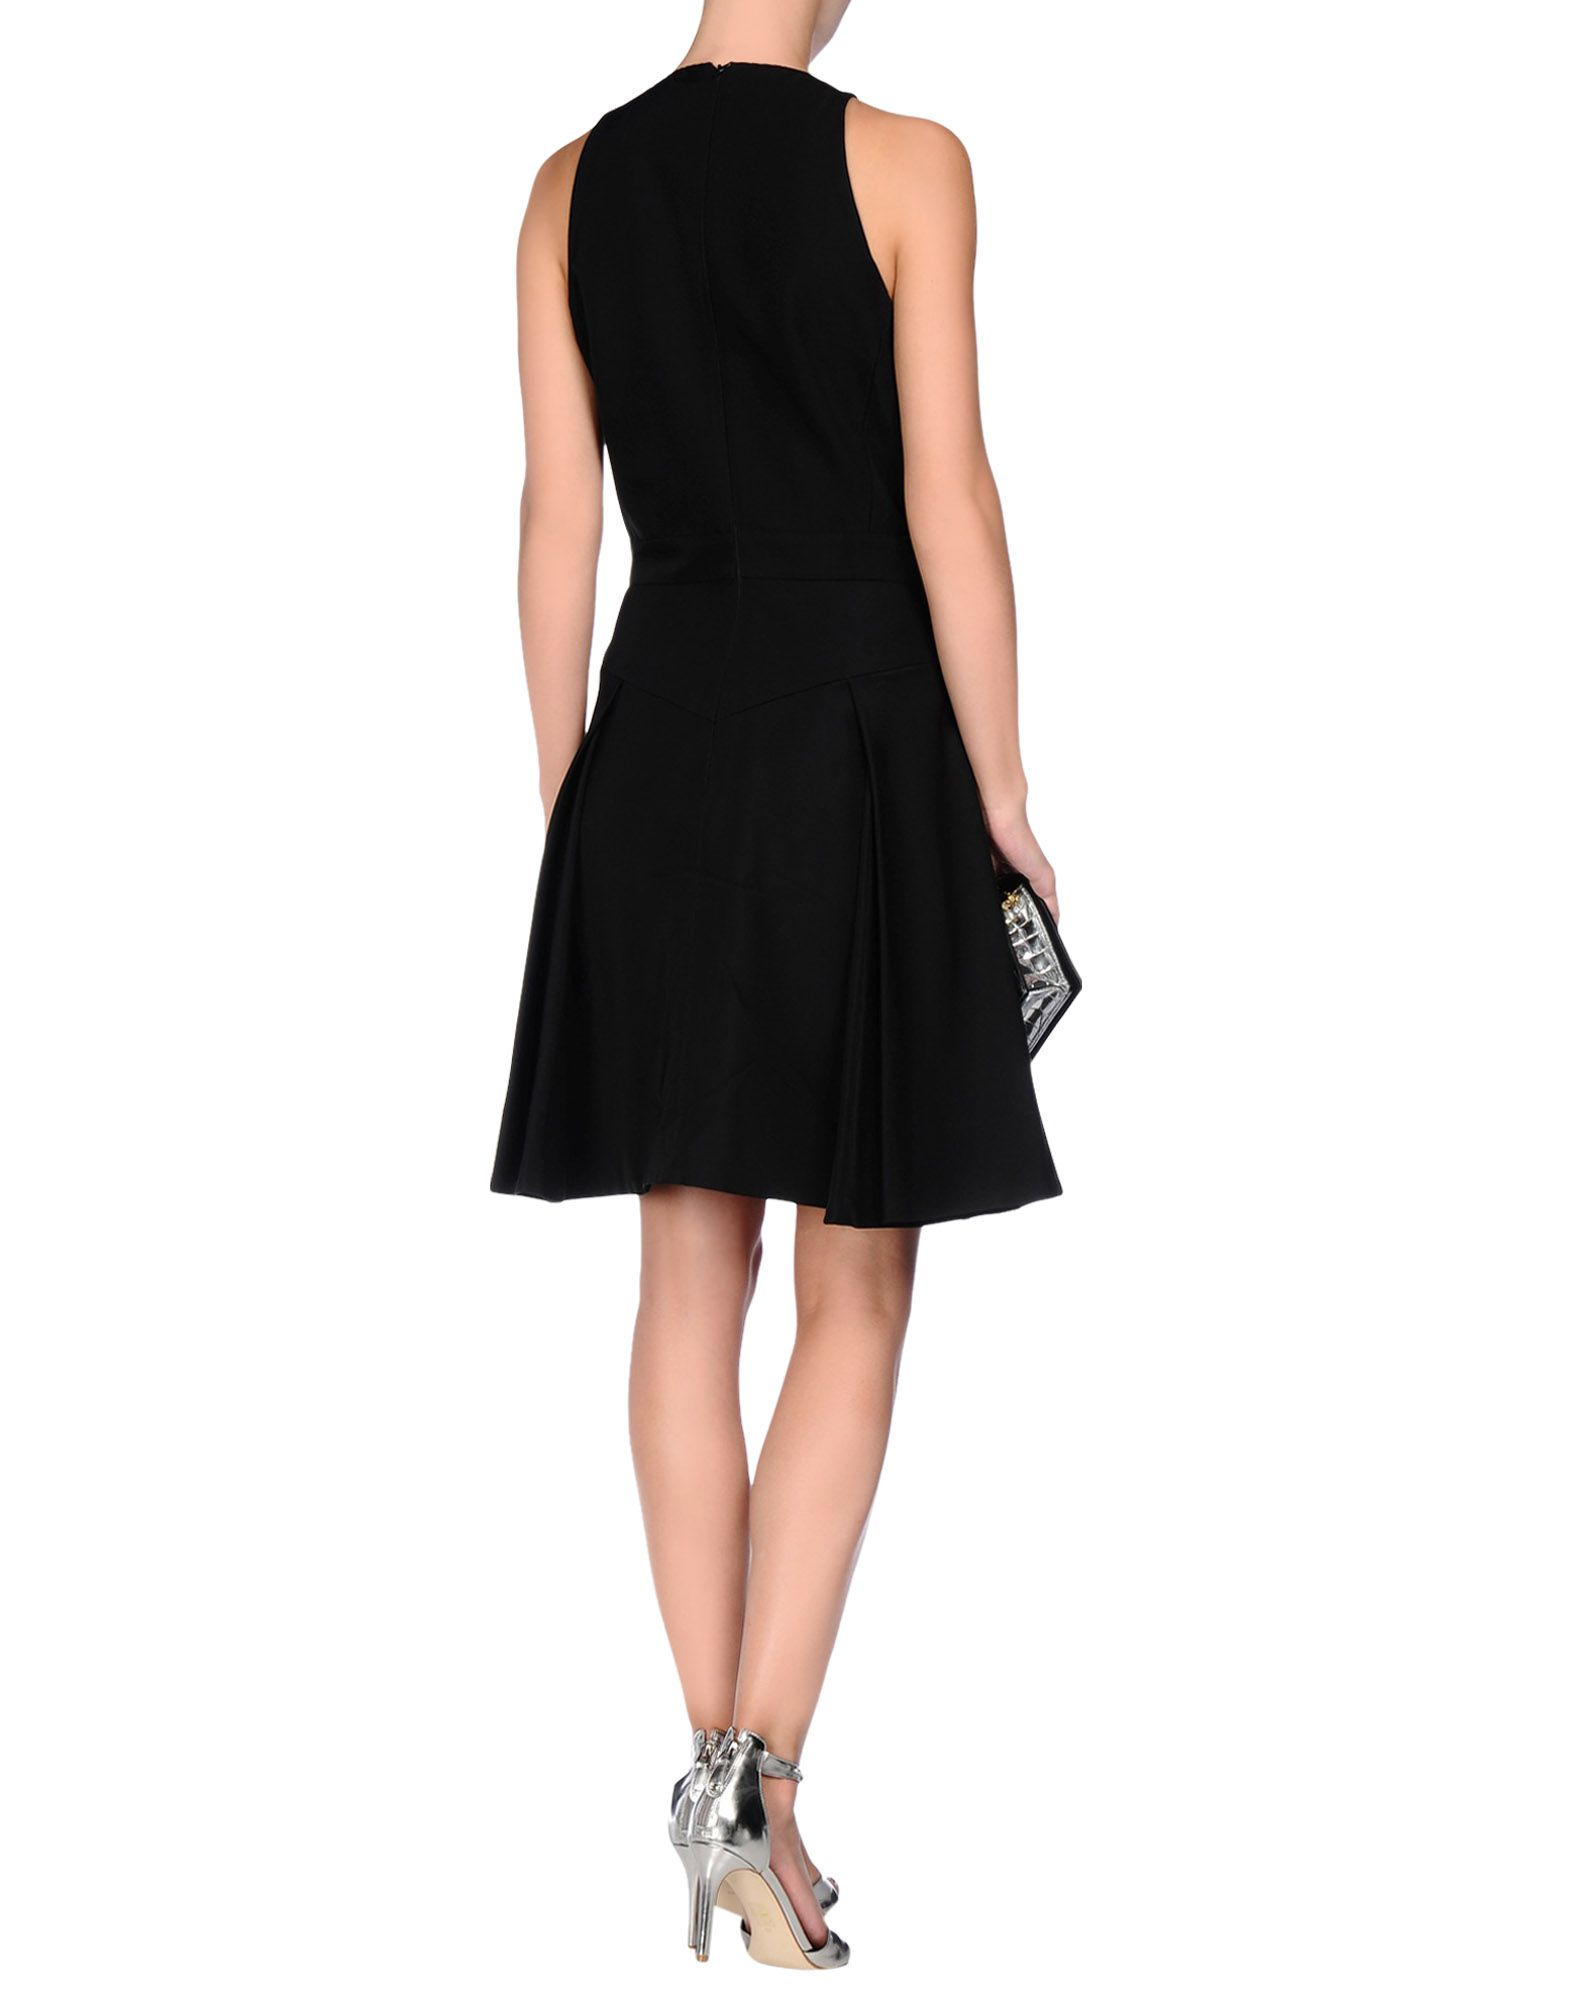 Mcq alexander mcqueen Short Dress in Black | Lyst